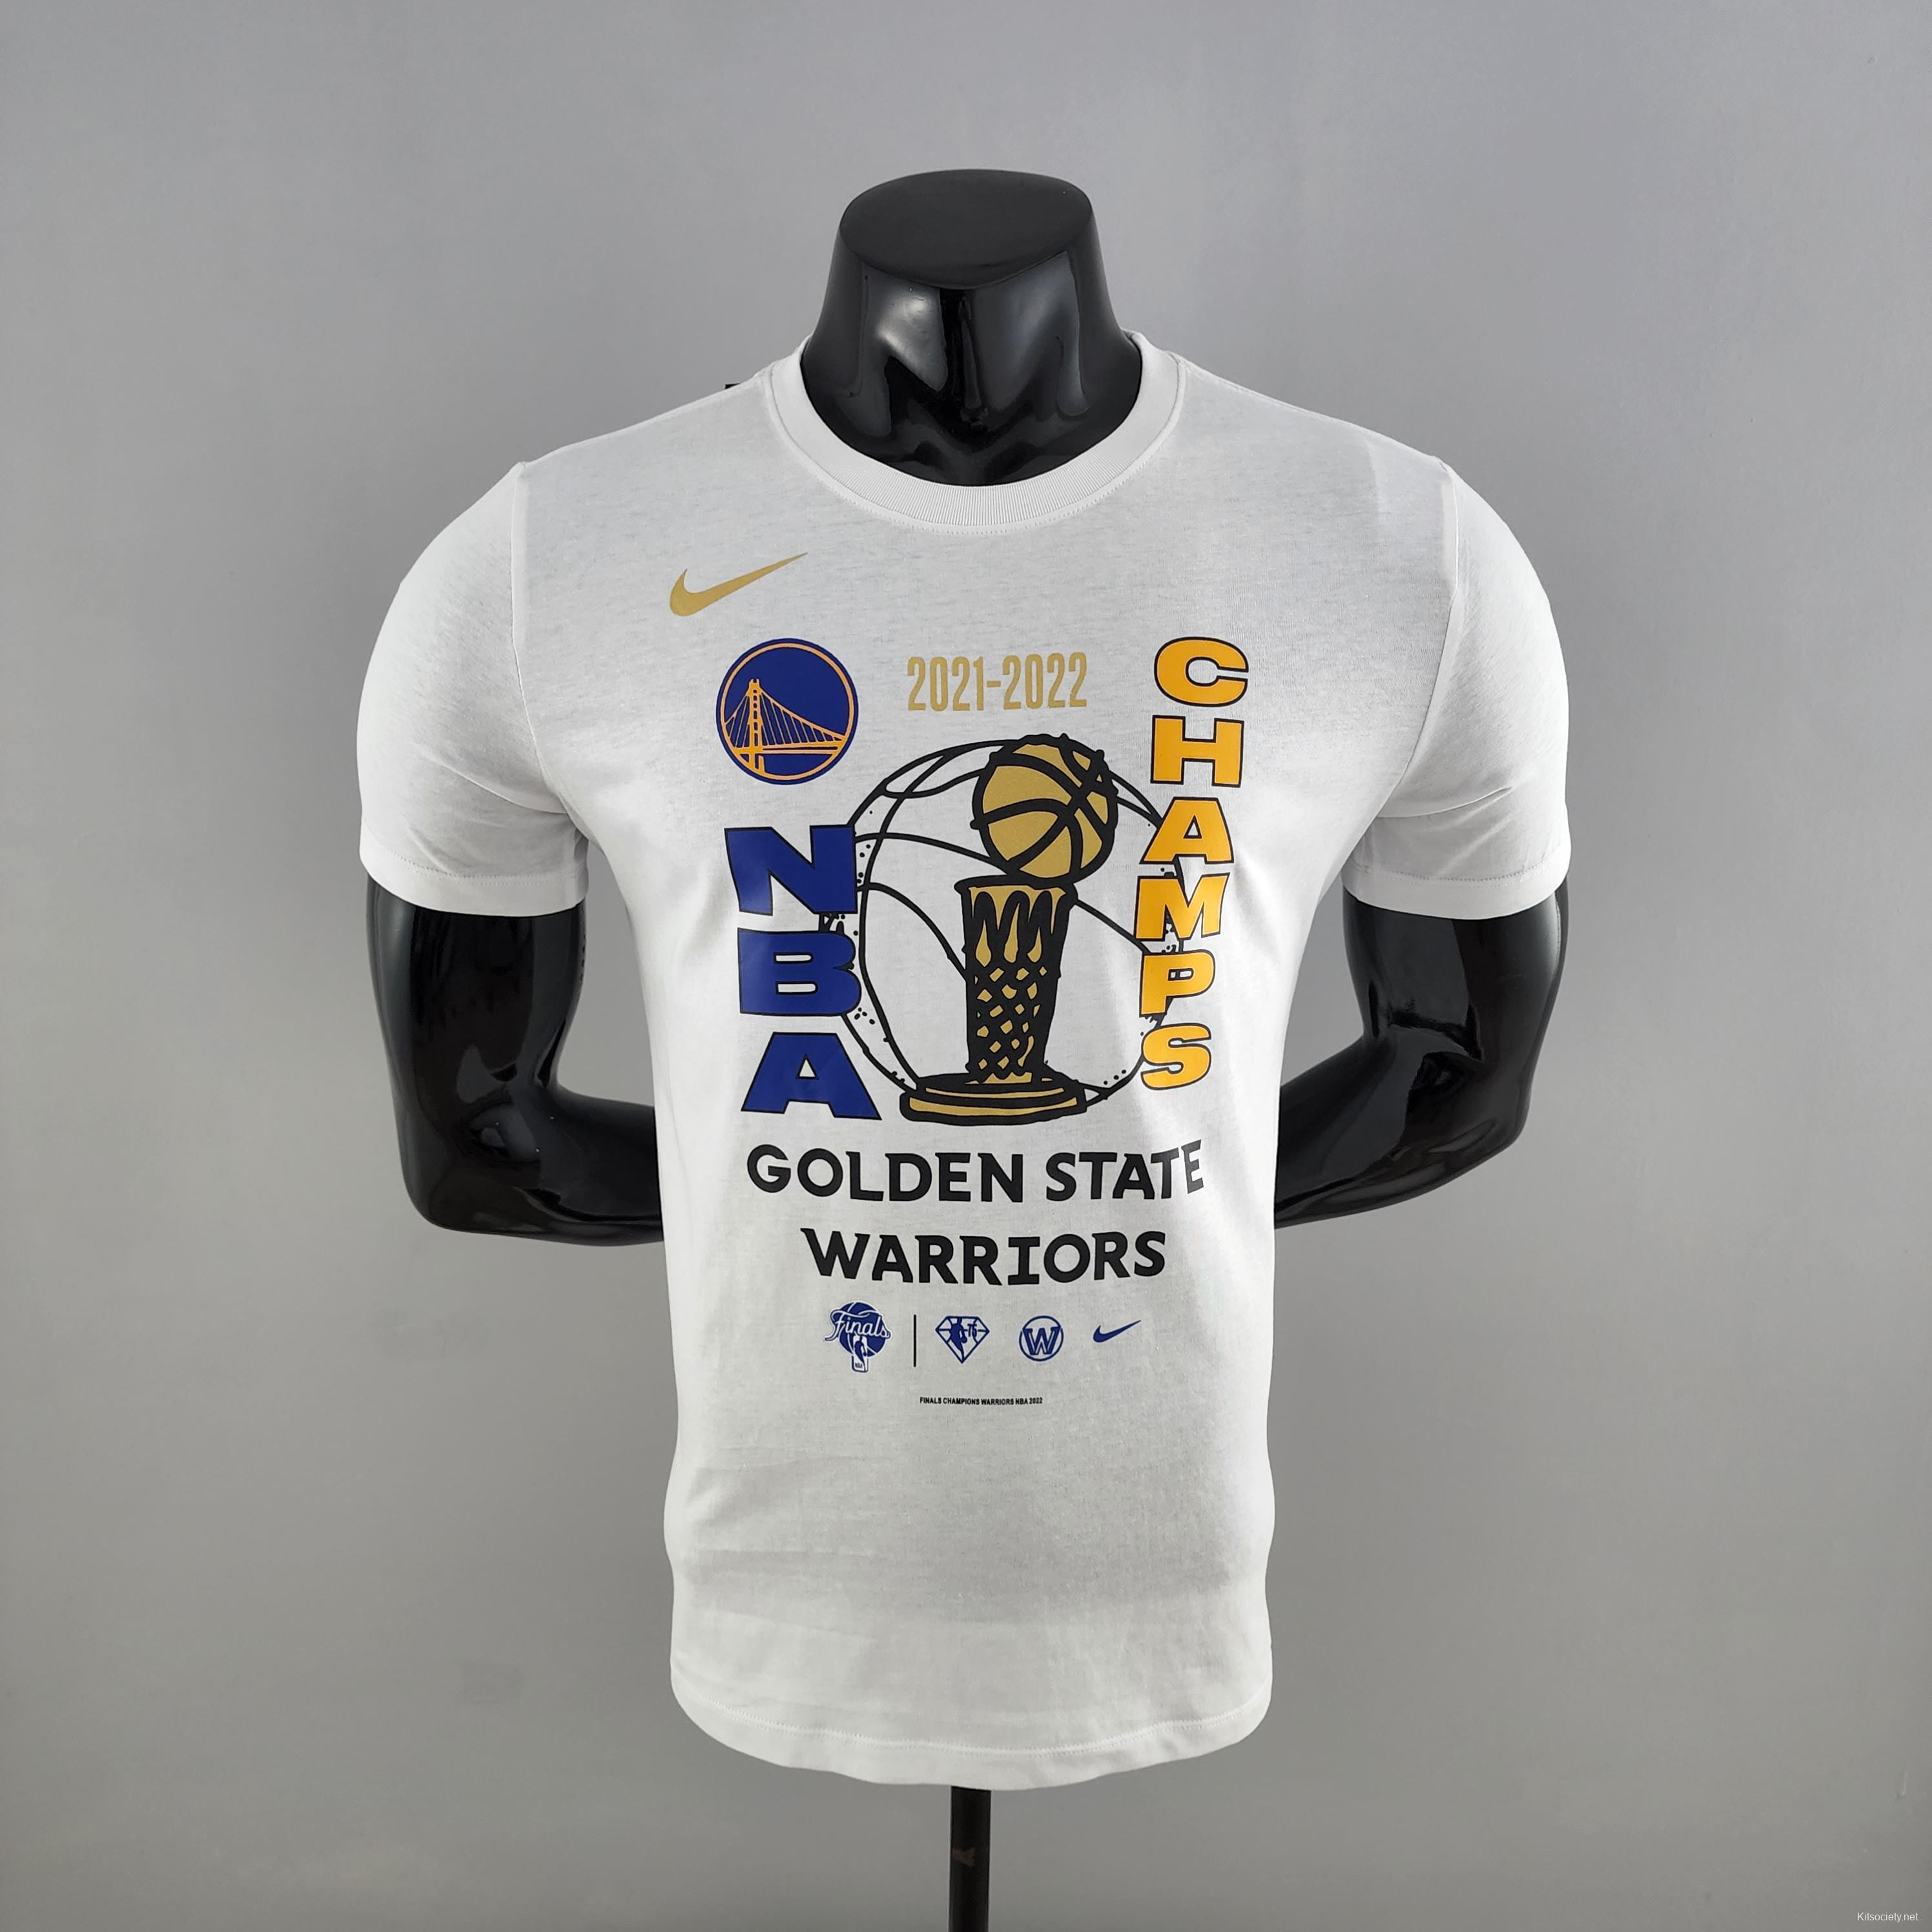 golden state championship t shirt